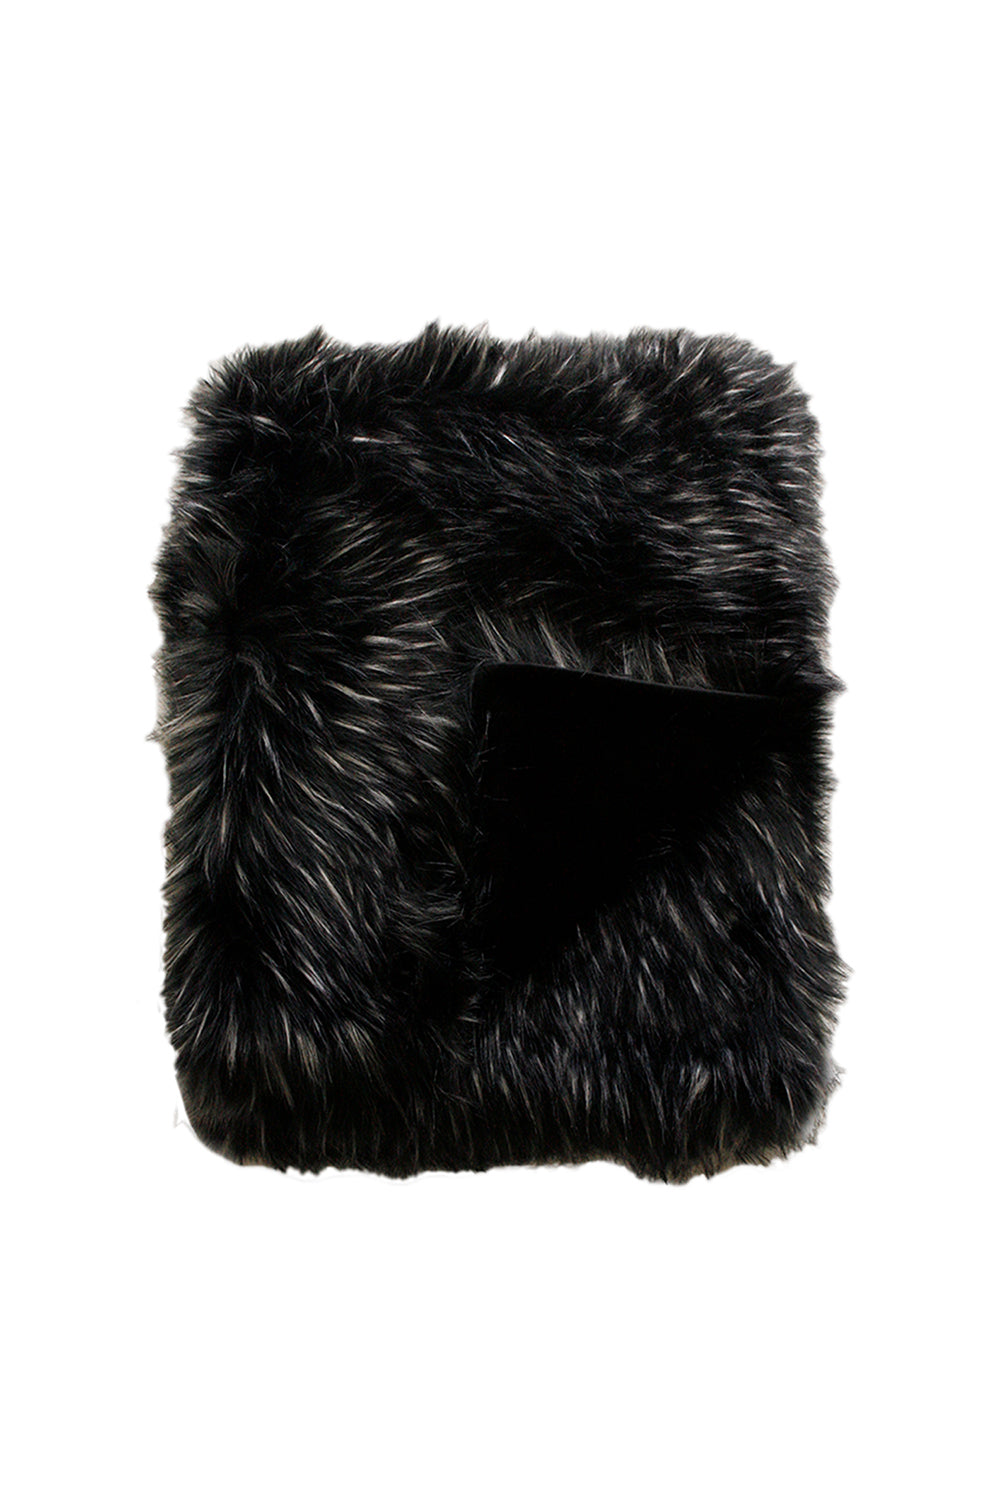 Imitation fake fur throw - Heirloom faux fur throw and cushions  in Ebony Plume Black SKU FEPT18